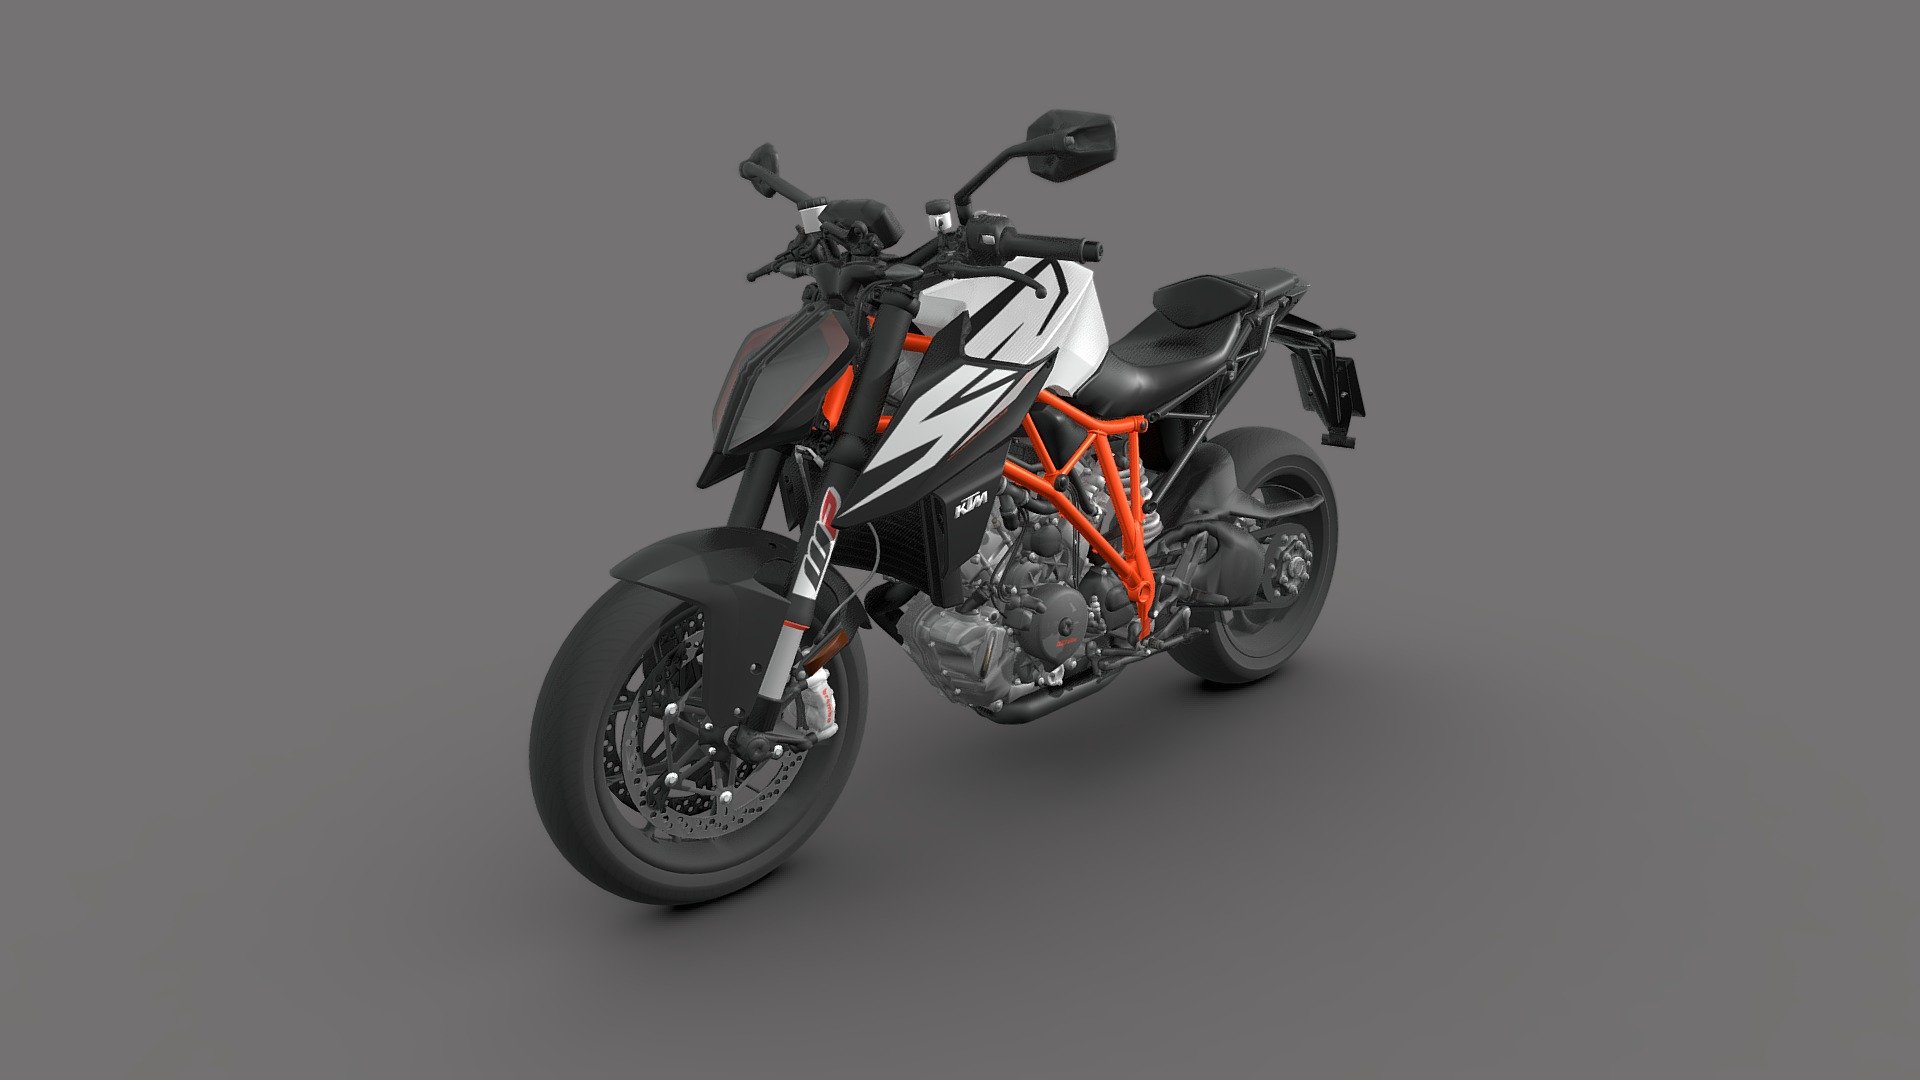 Highly detailed 3D Bike model of KTM DUKE

Duke | Bike model 3D | Realistic Textured file | Download Now

Formats

.Blend
.FBX
.Obj
.dae
.abc
.glb - KTM Duke - Buy Royalty Free 3D model by dr dark mt (@dr_dark_mt) 3d model